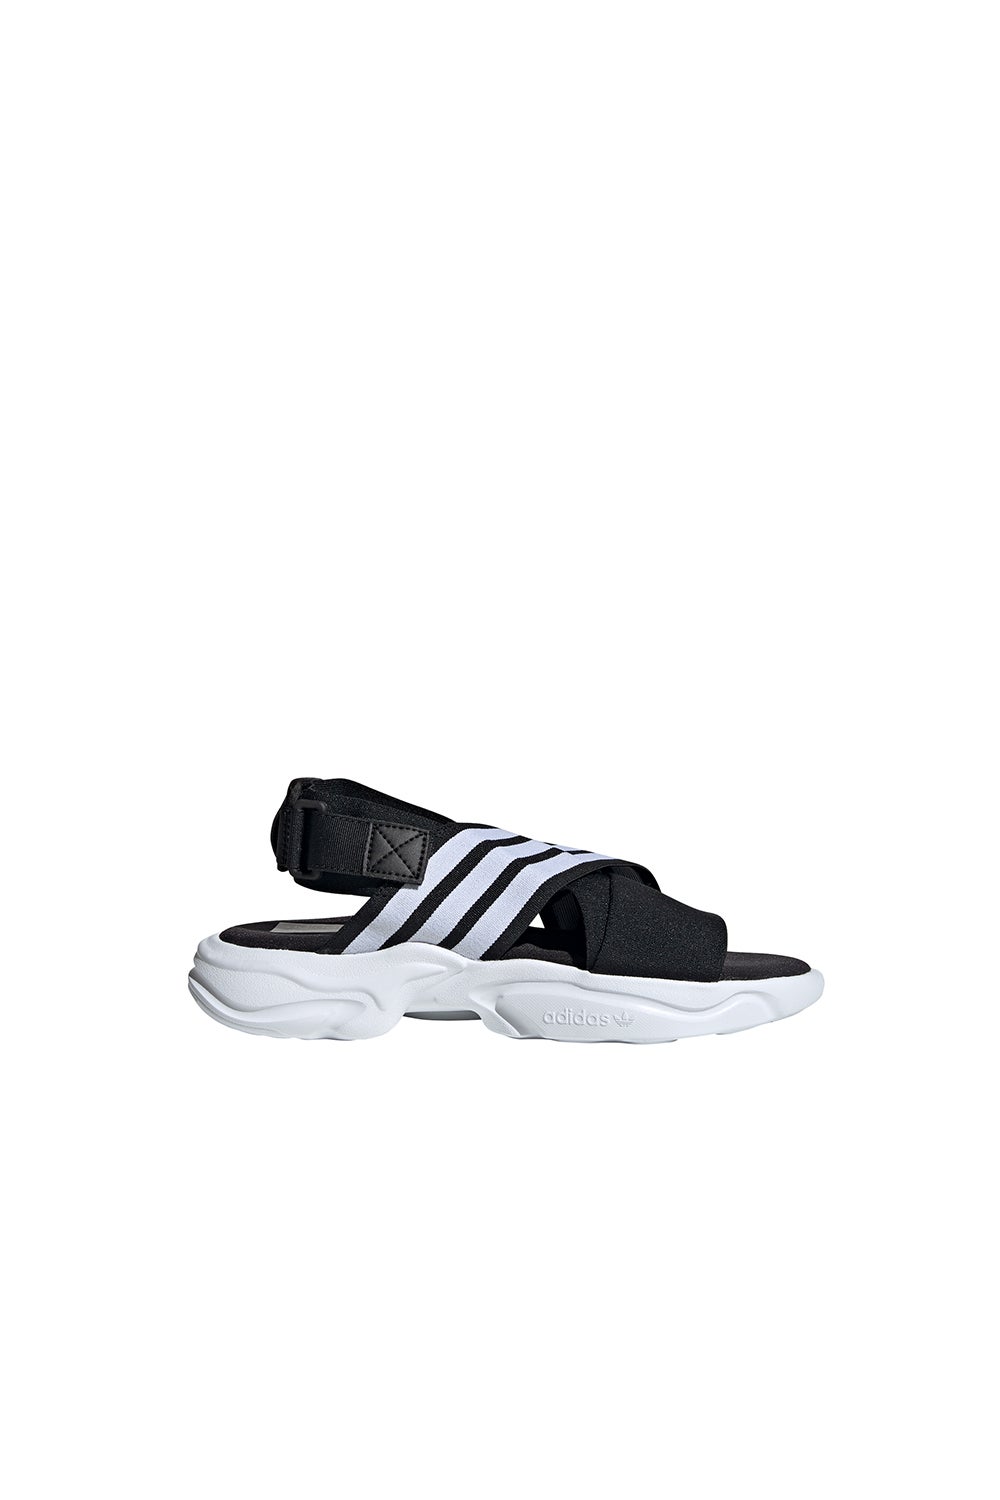 adidas Magmur Sandal Core Black/FTWR White